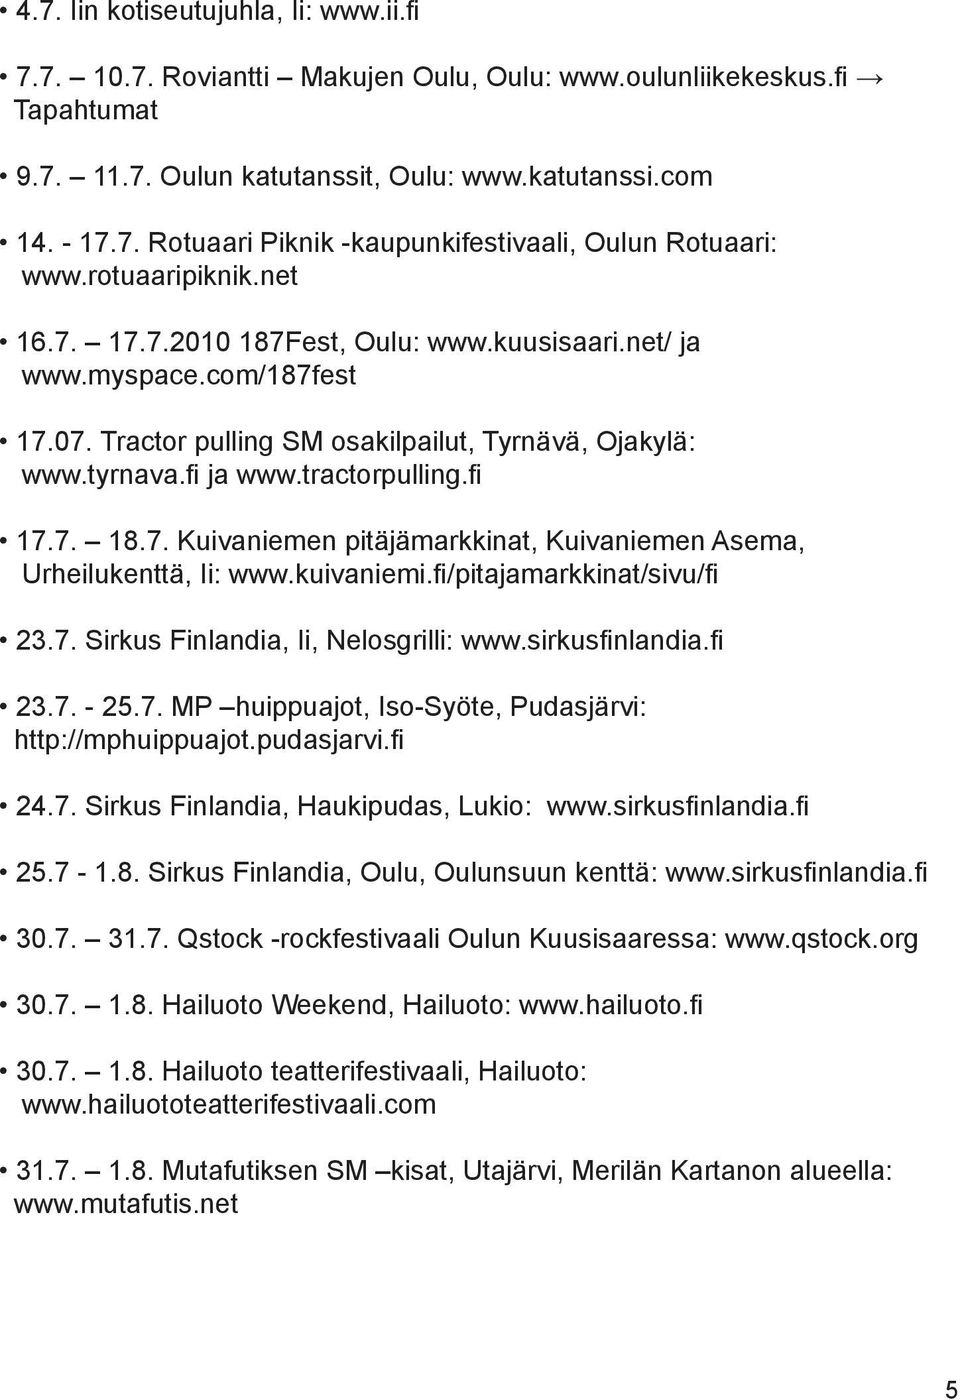 kuivaniemi.fi/pitajamarkkinat/sivu/fi 23.7. Sirkus Finlandia, Ii, Nelosgrilli: www.sirkusfinlandia.fi 23.7. - 25.7. MP huippuajot, Iso-Syöte, Pudasjärvi: http://mphuippuajot.pudasjarvi.fi 24.7. Sirkus Finlandia, Haukipudas, Lukio: www.